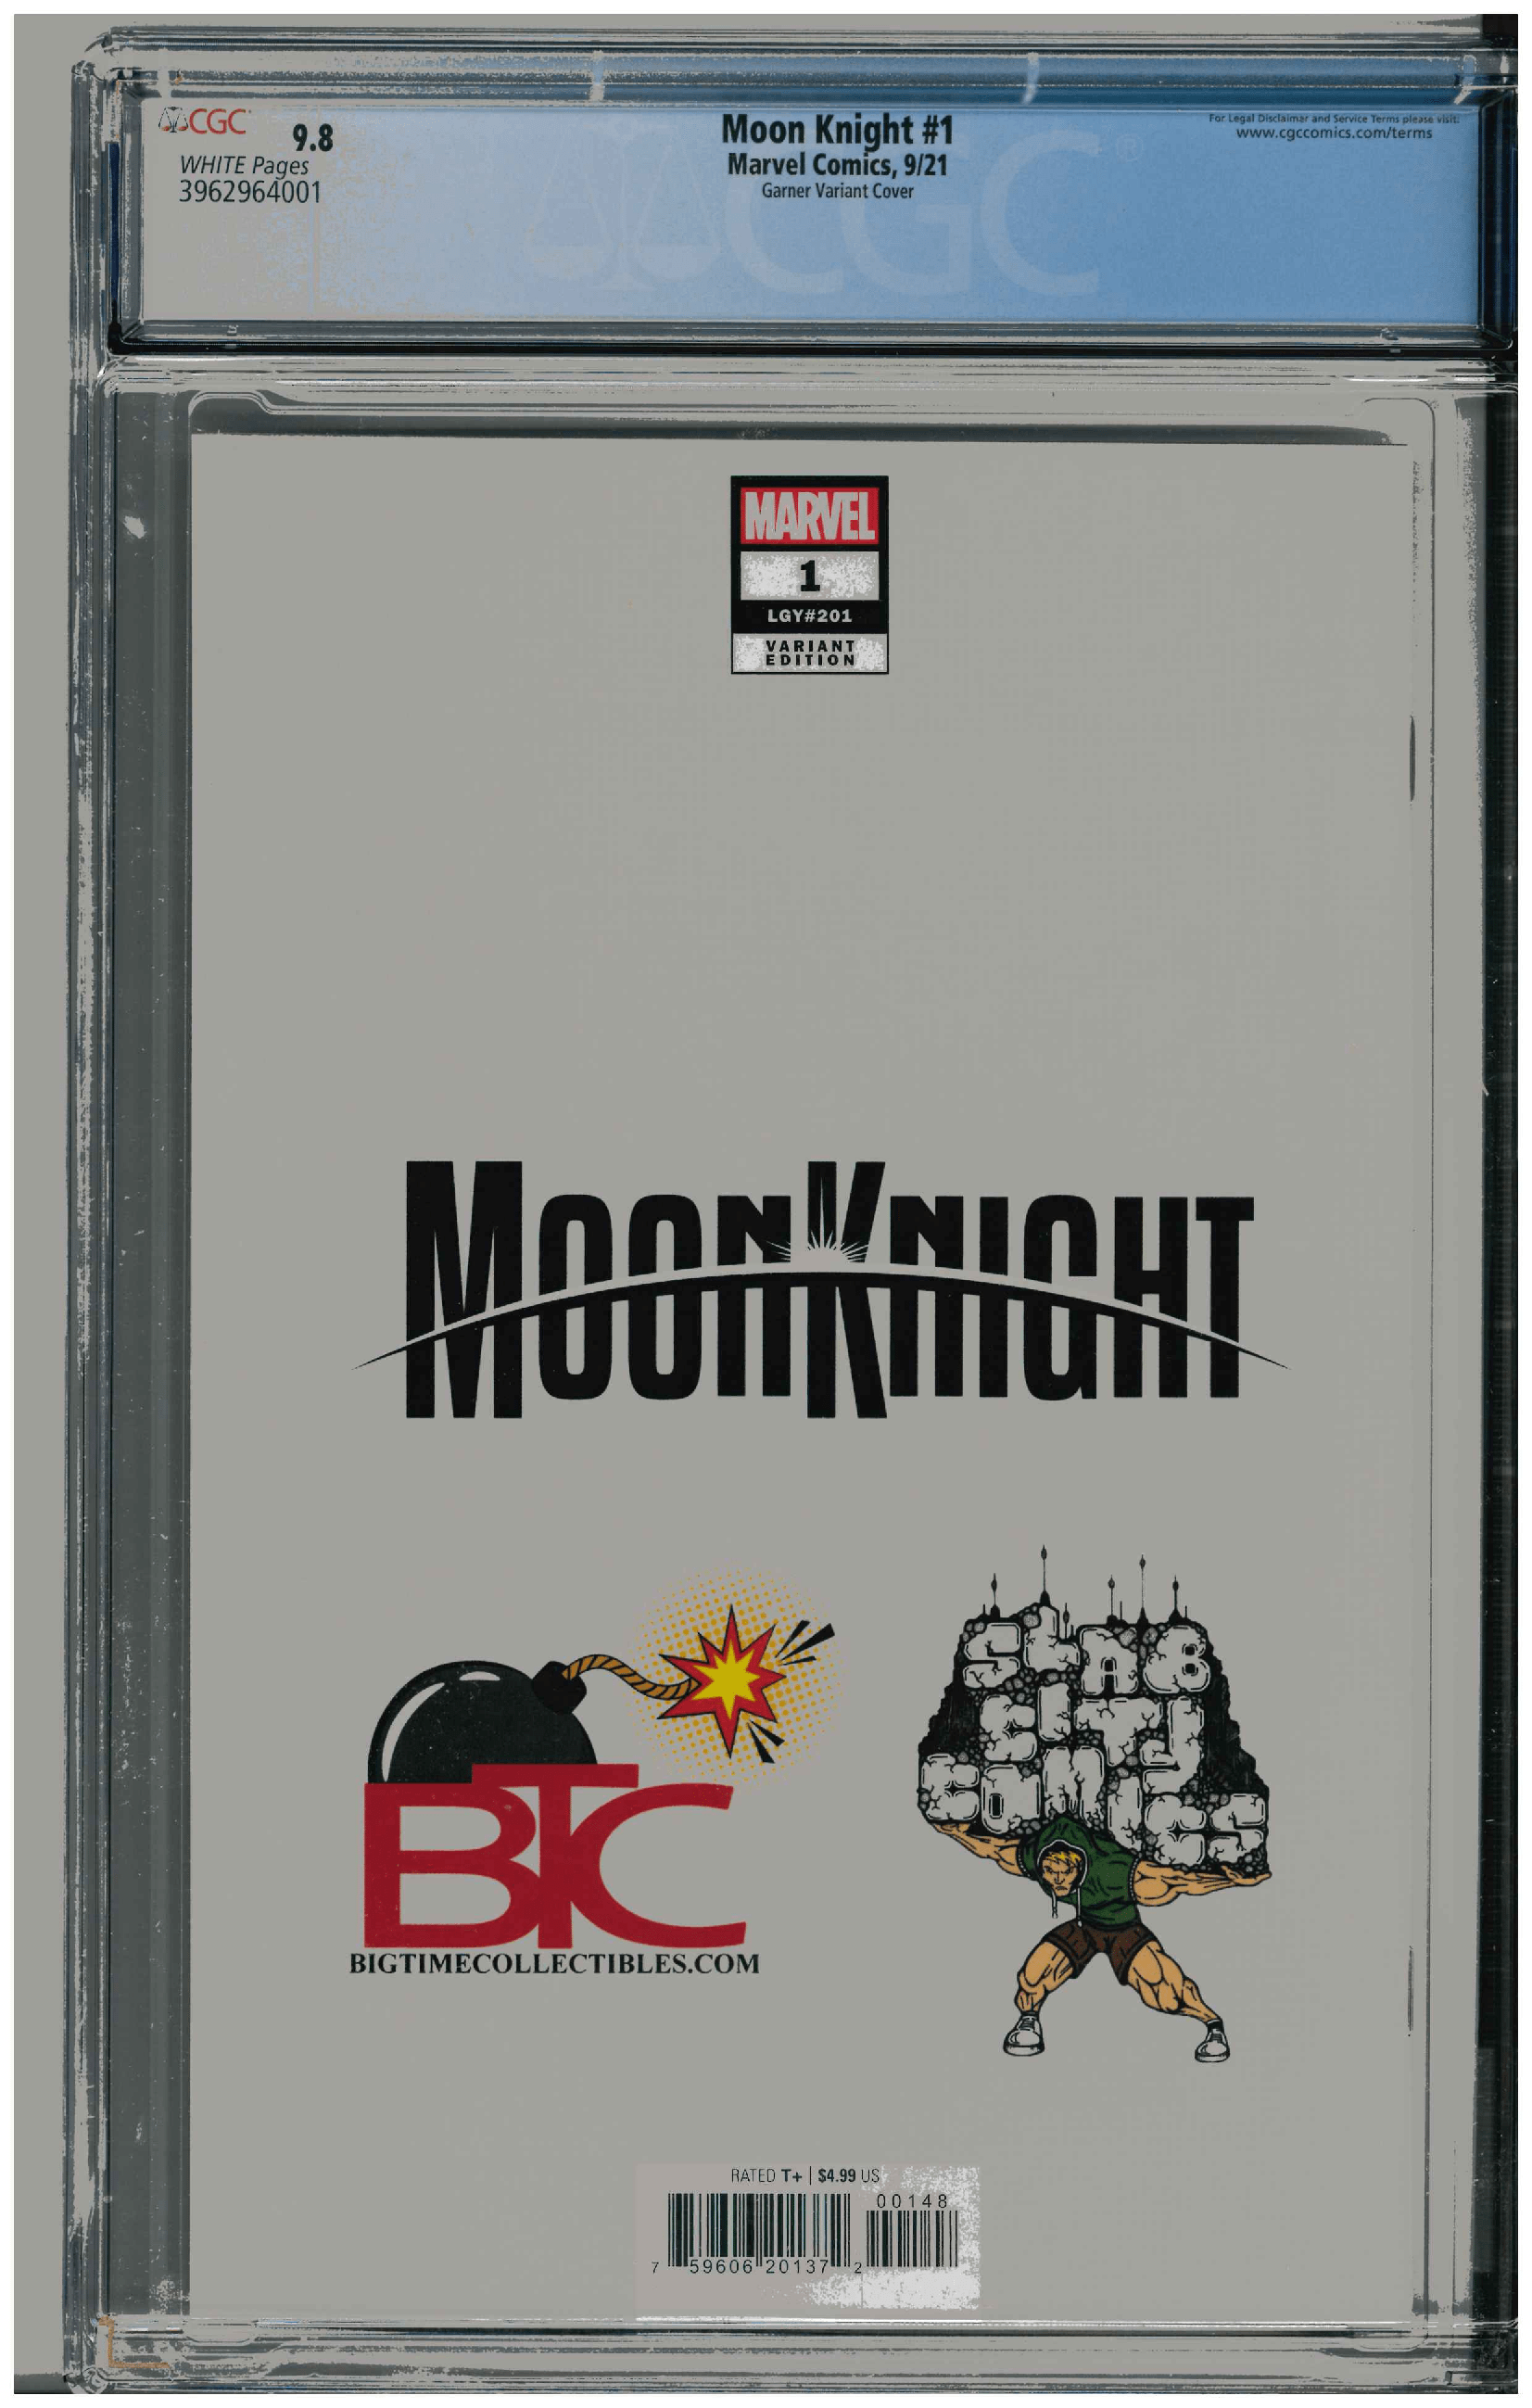 Moon Knight #1 backside